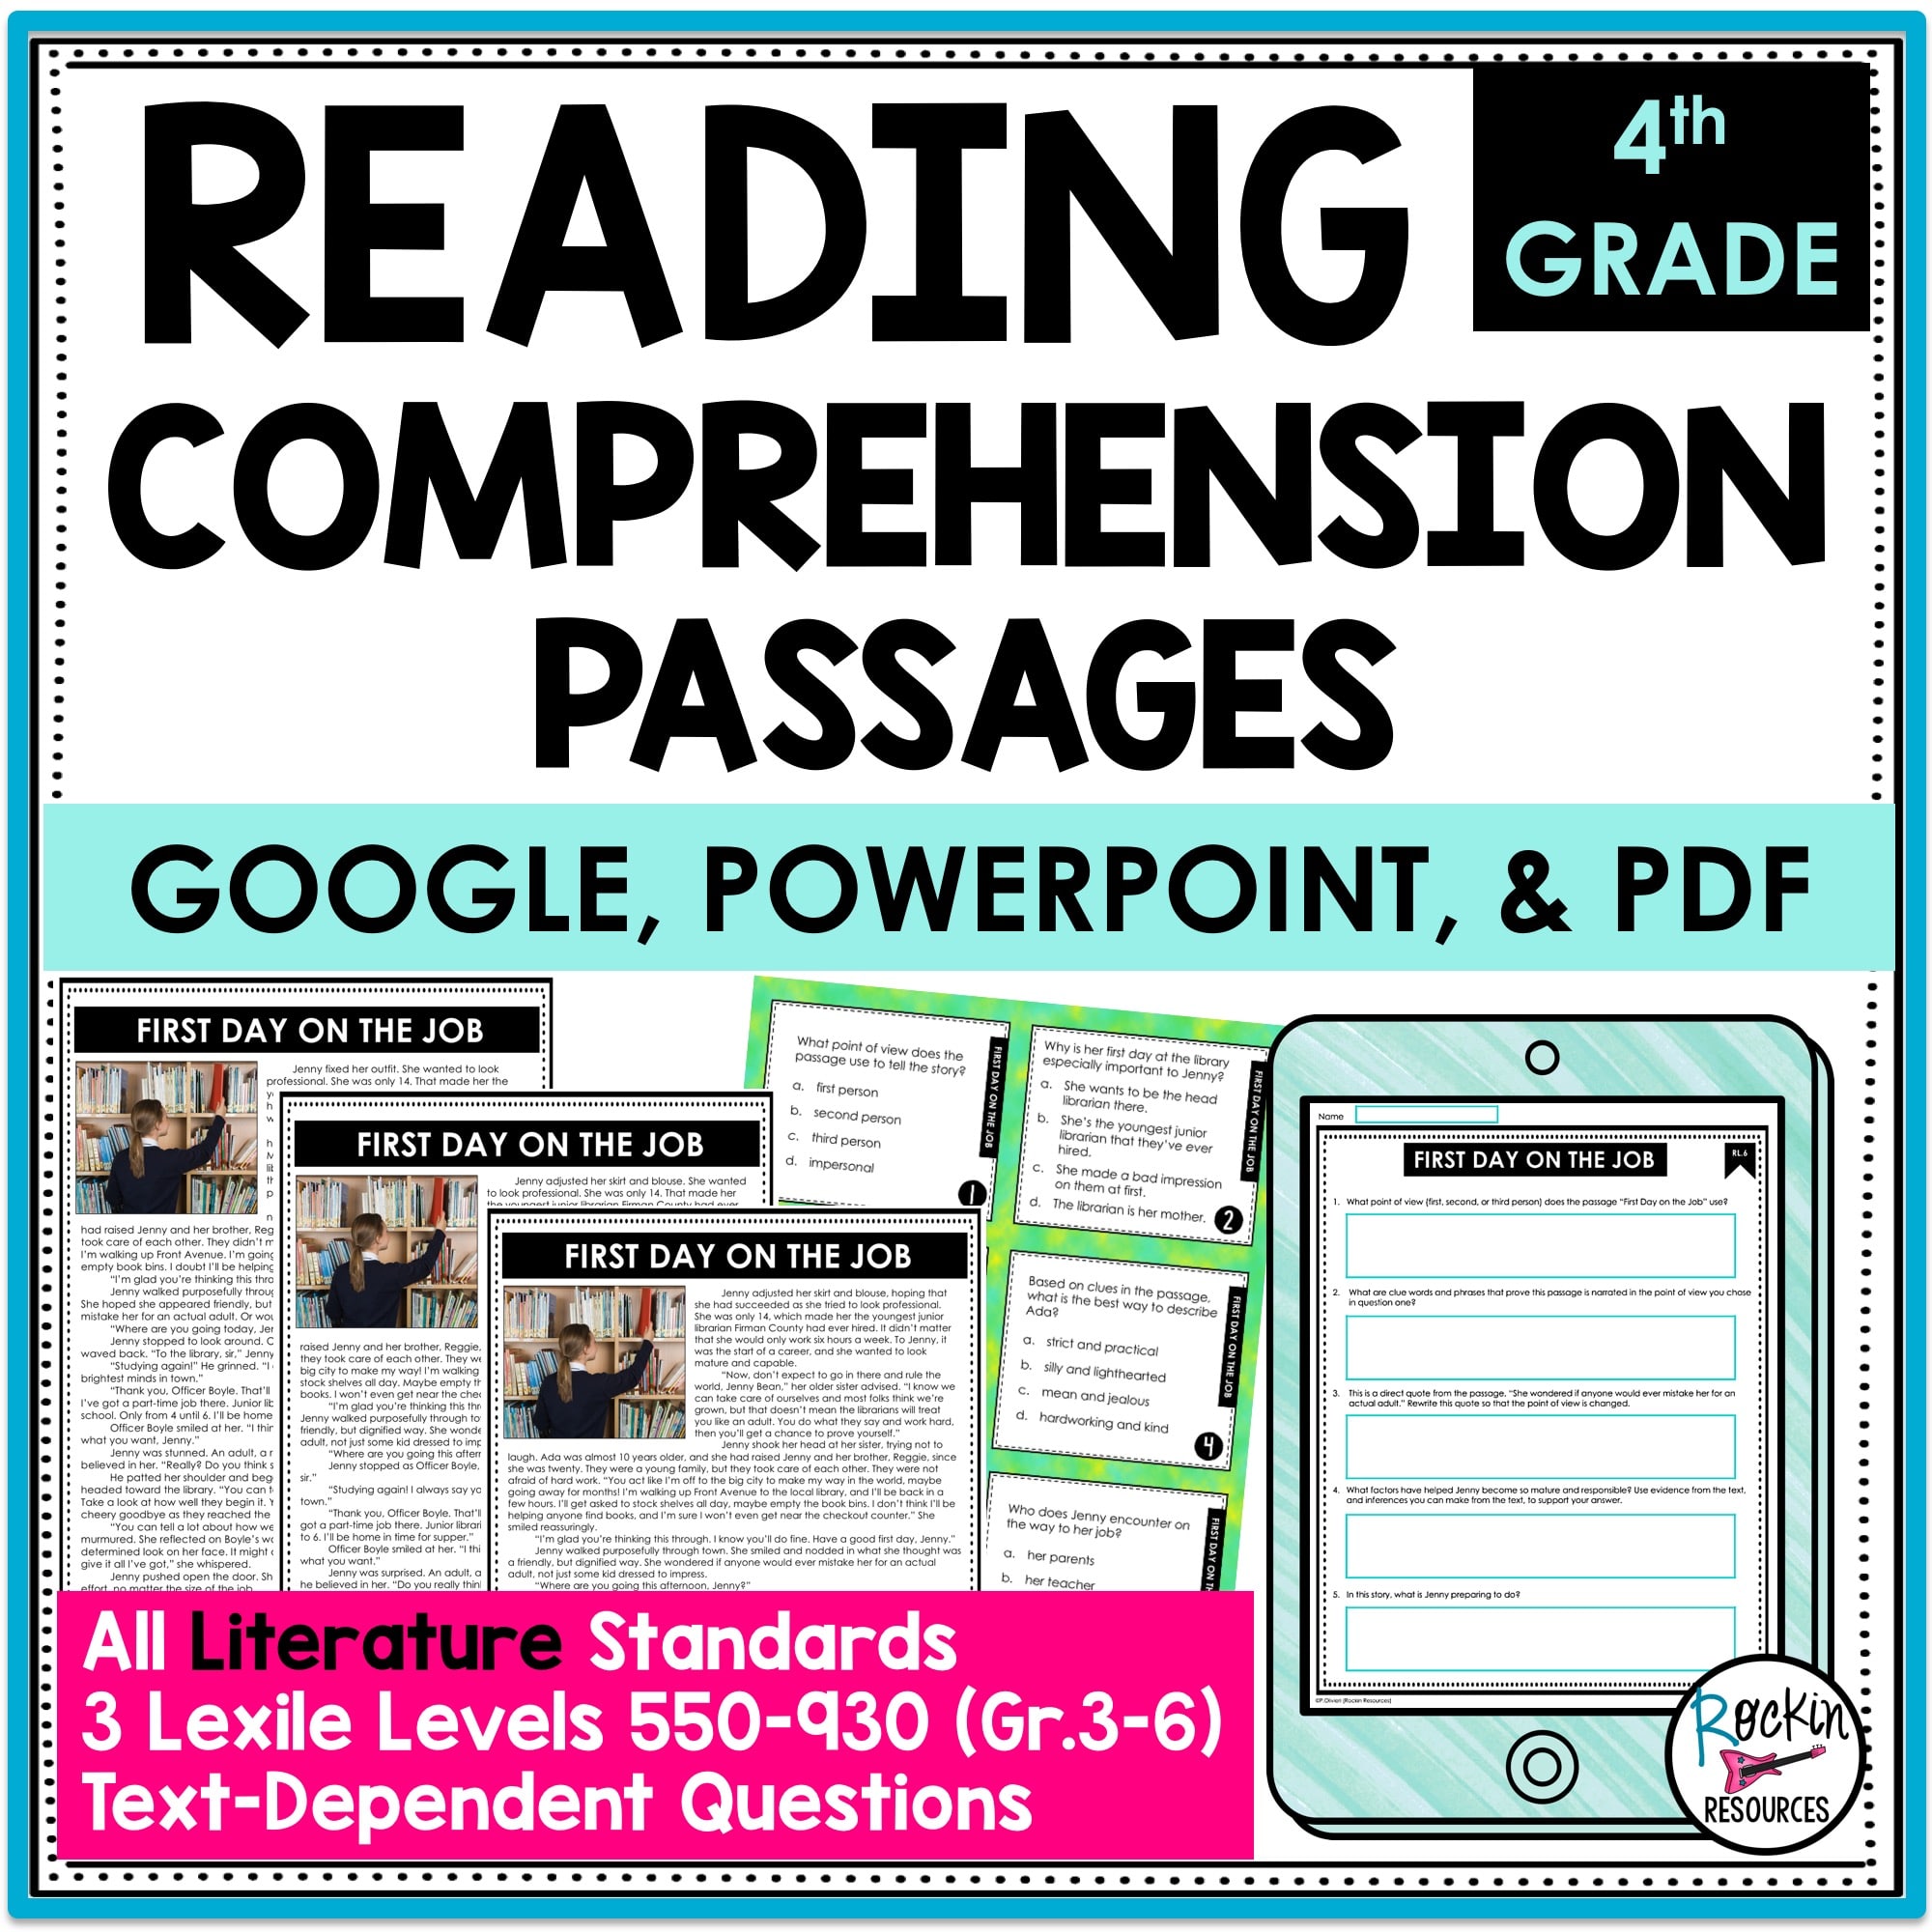 4th grade literature reading comprehension passages rockin resources